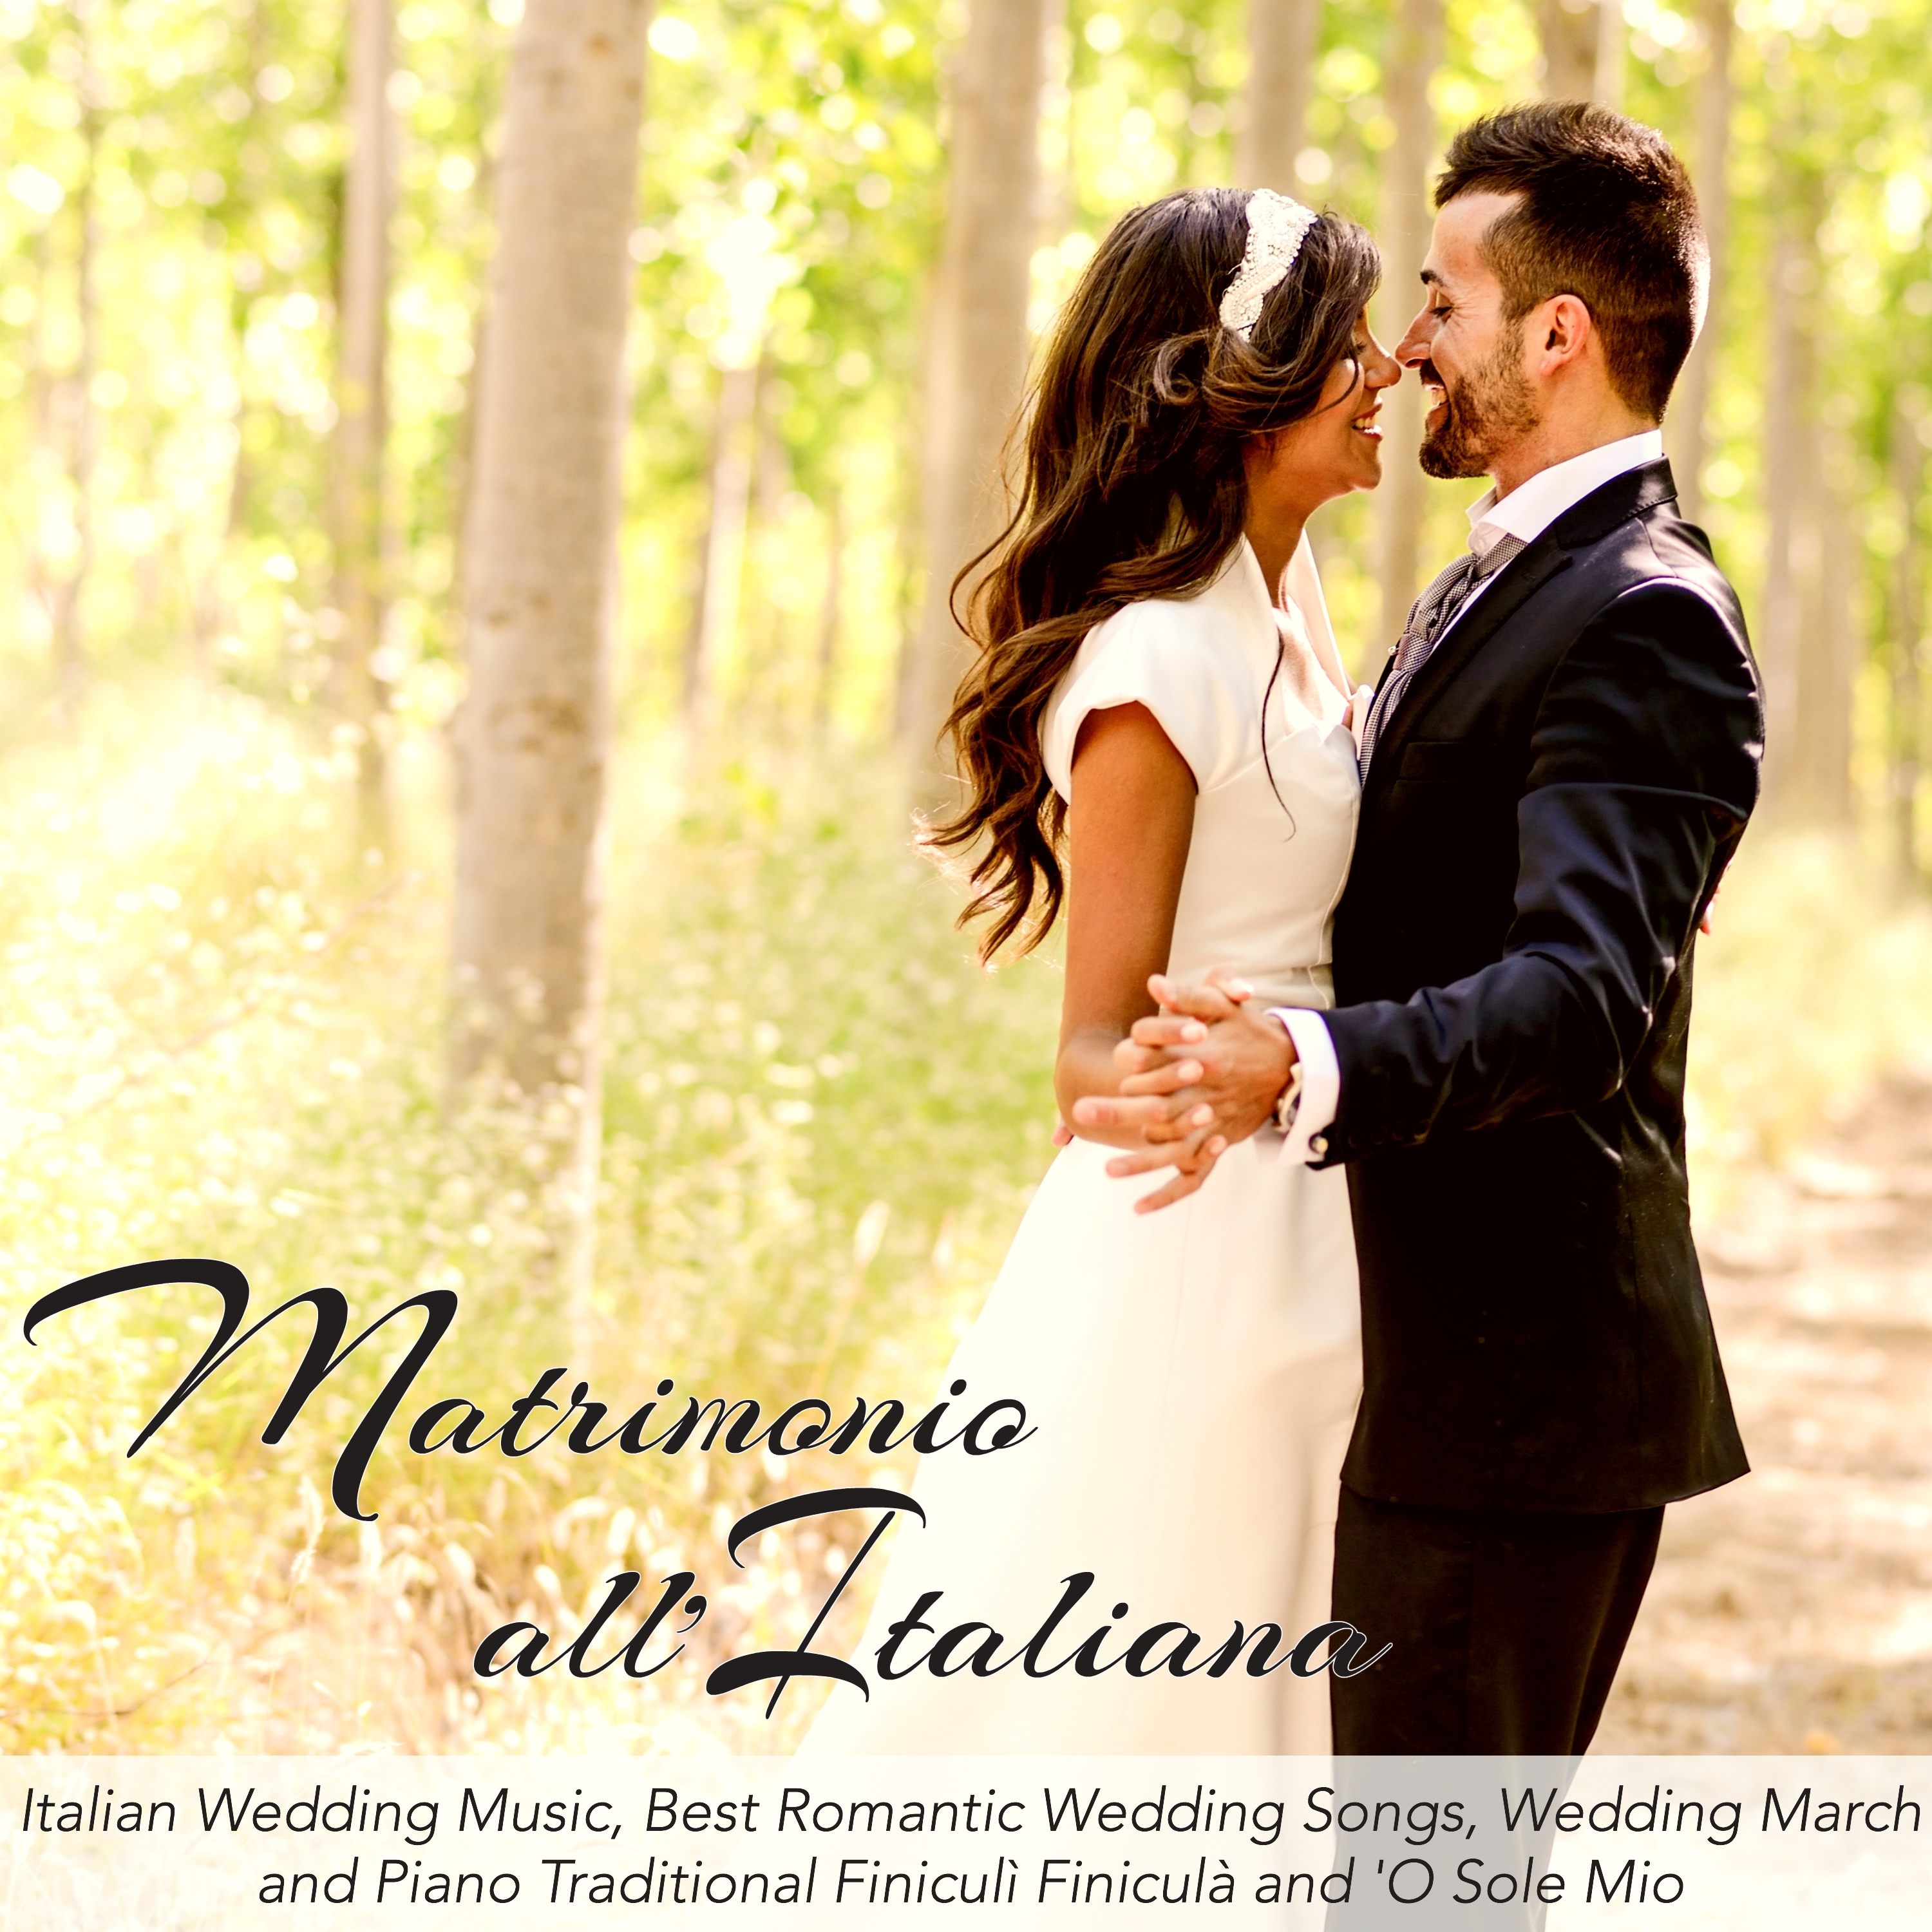 Matrimonio all' Italiana  Italian Wedding Music, Best Romantic Wedding Songs, Wedding March and Piano Traditional Finiculi Finicula